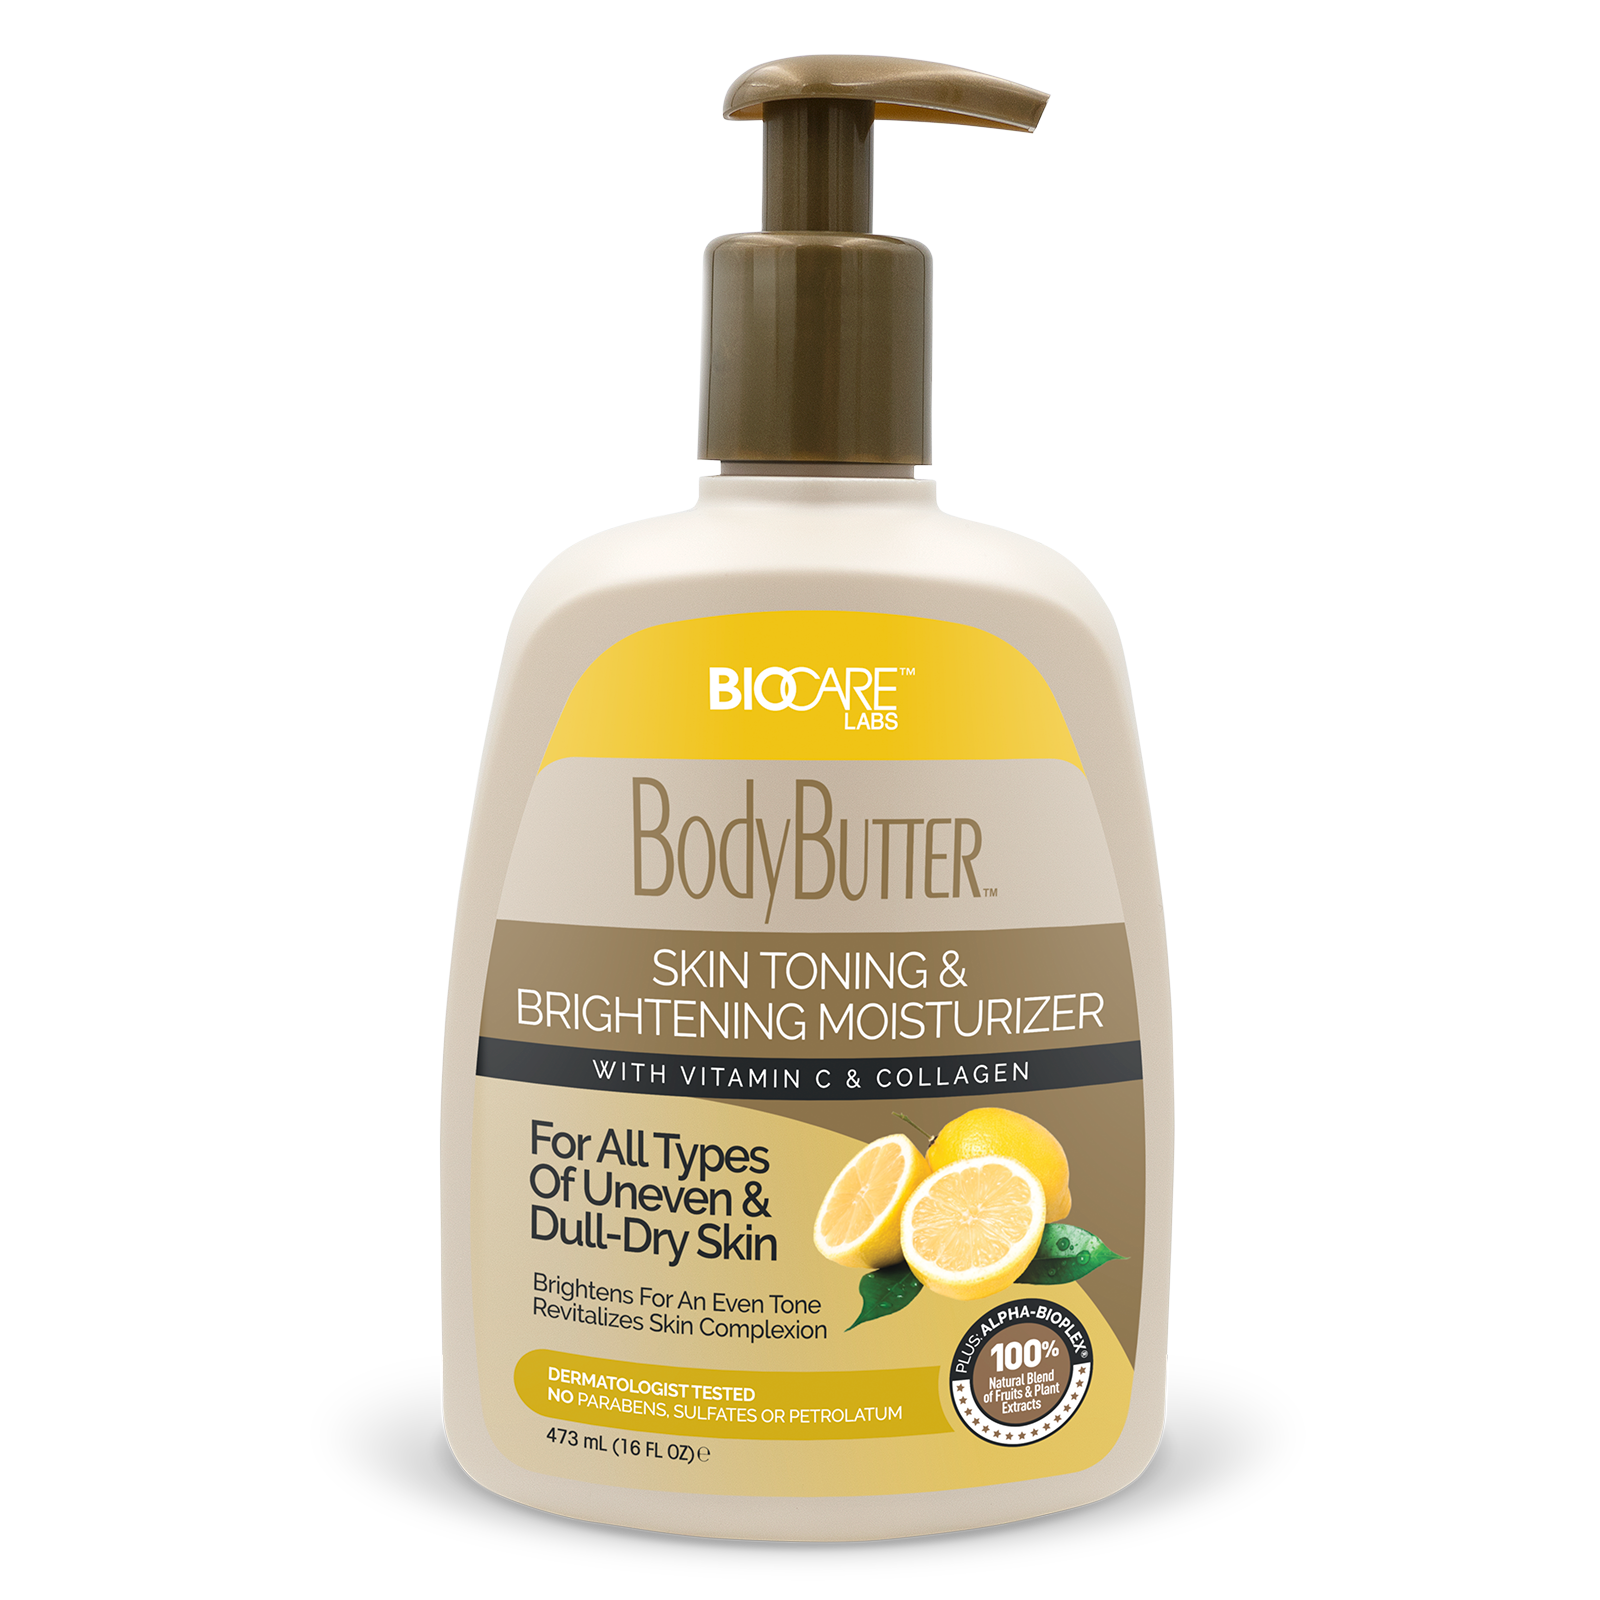  16 oz bottle of BodyButter™ With Vitamin C & Collagen